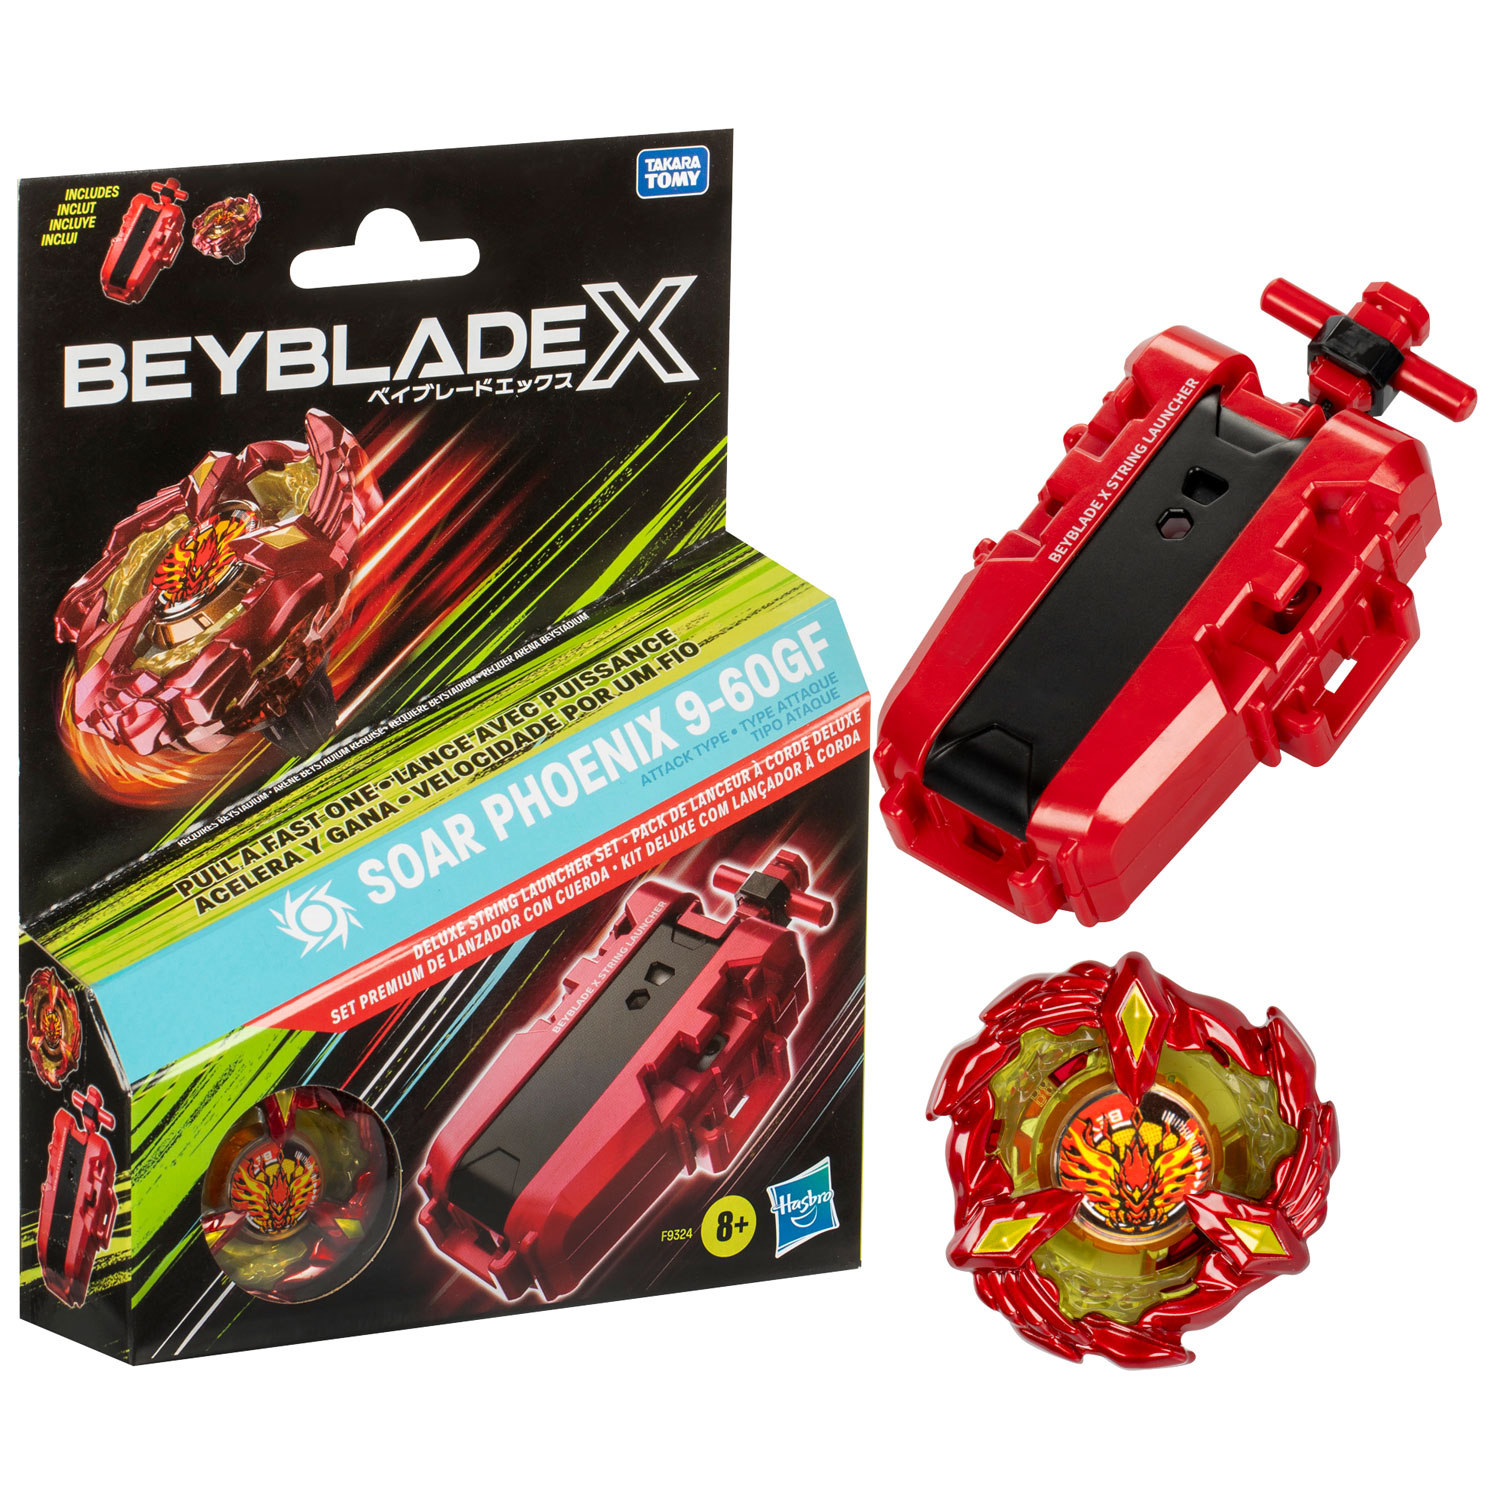 Beyblade X Soar Phoenix Deluxe String Launcher Set